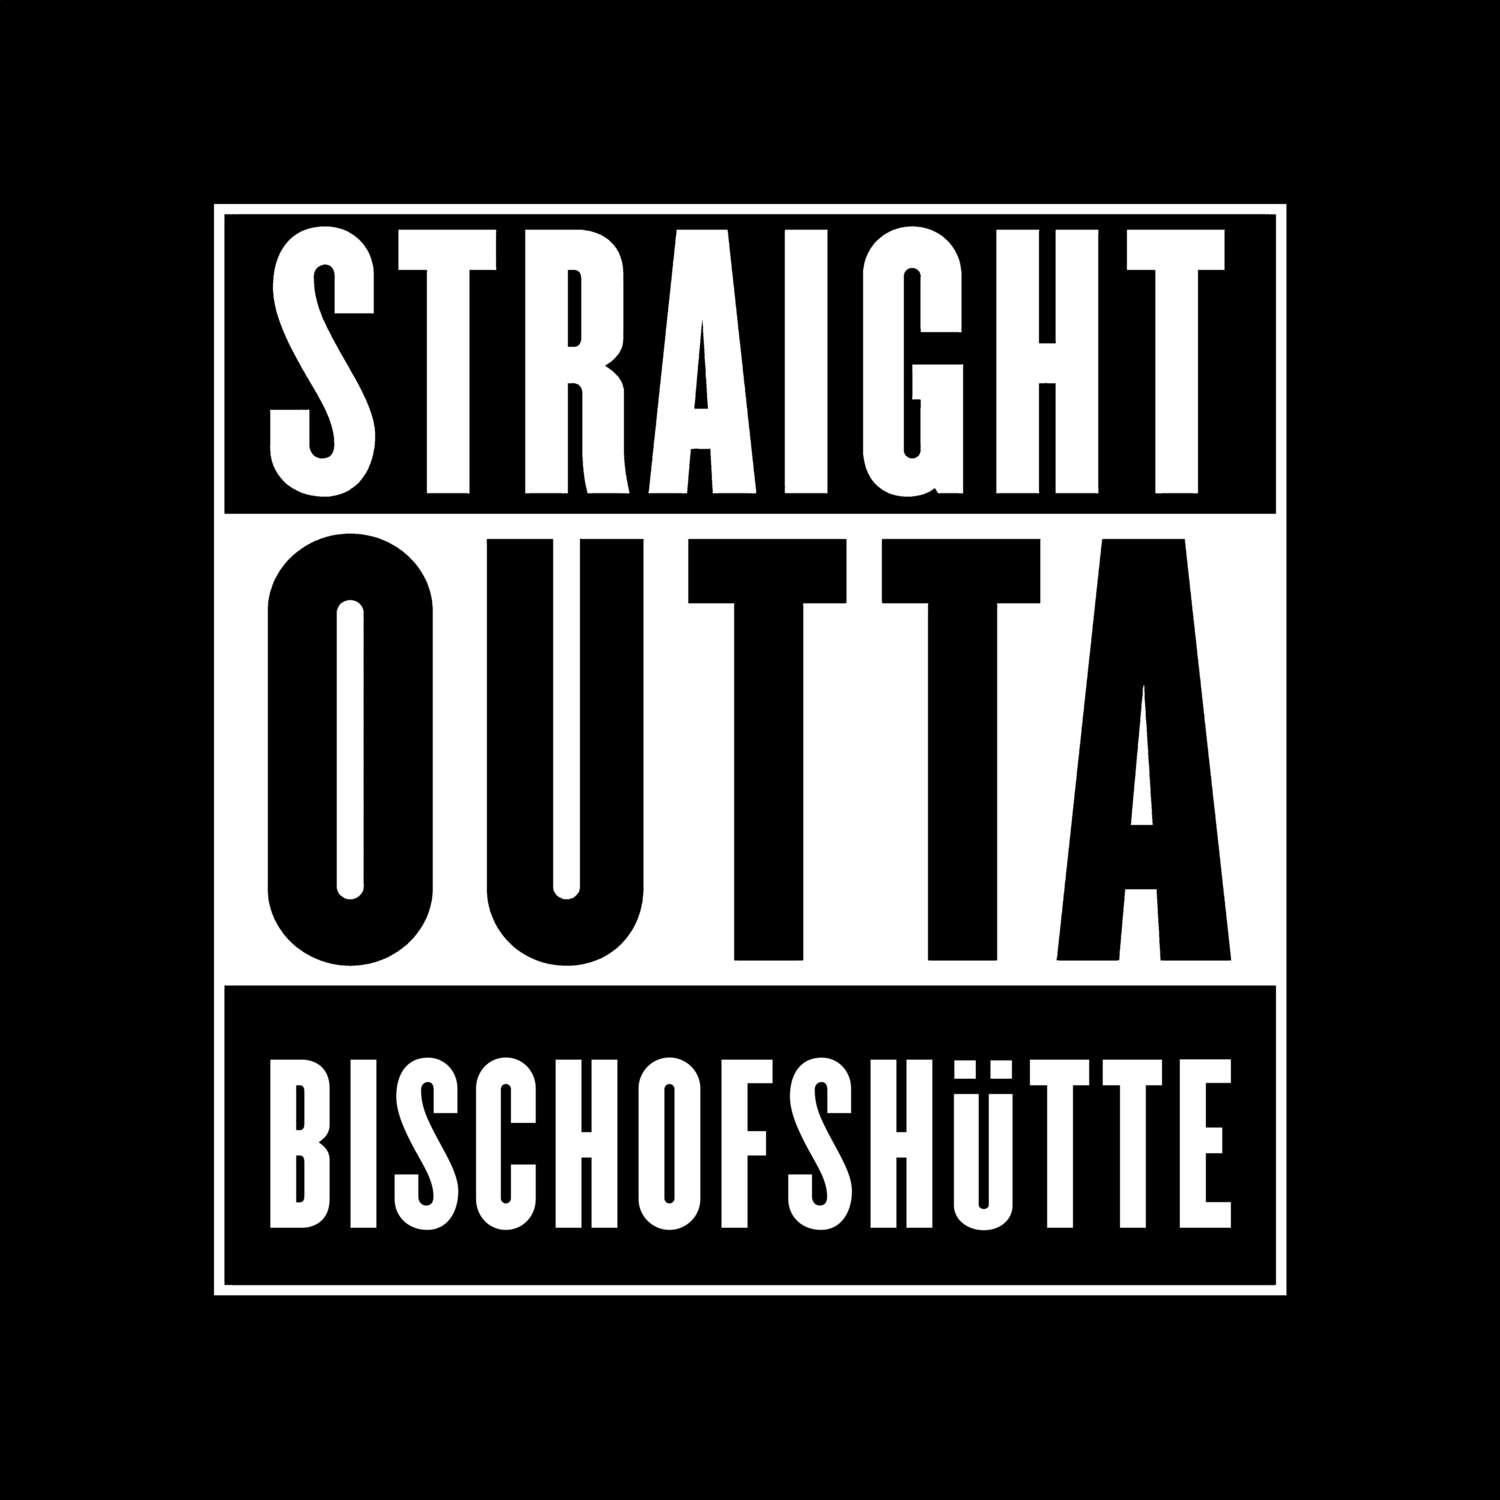 Bischofshütte T-Shirt »Straight Outta«